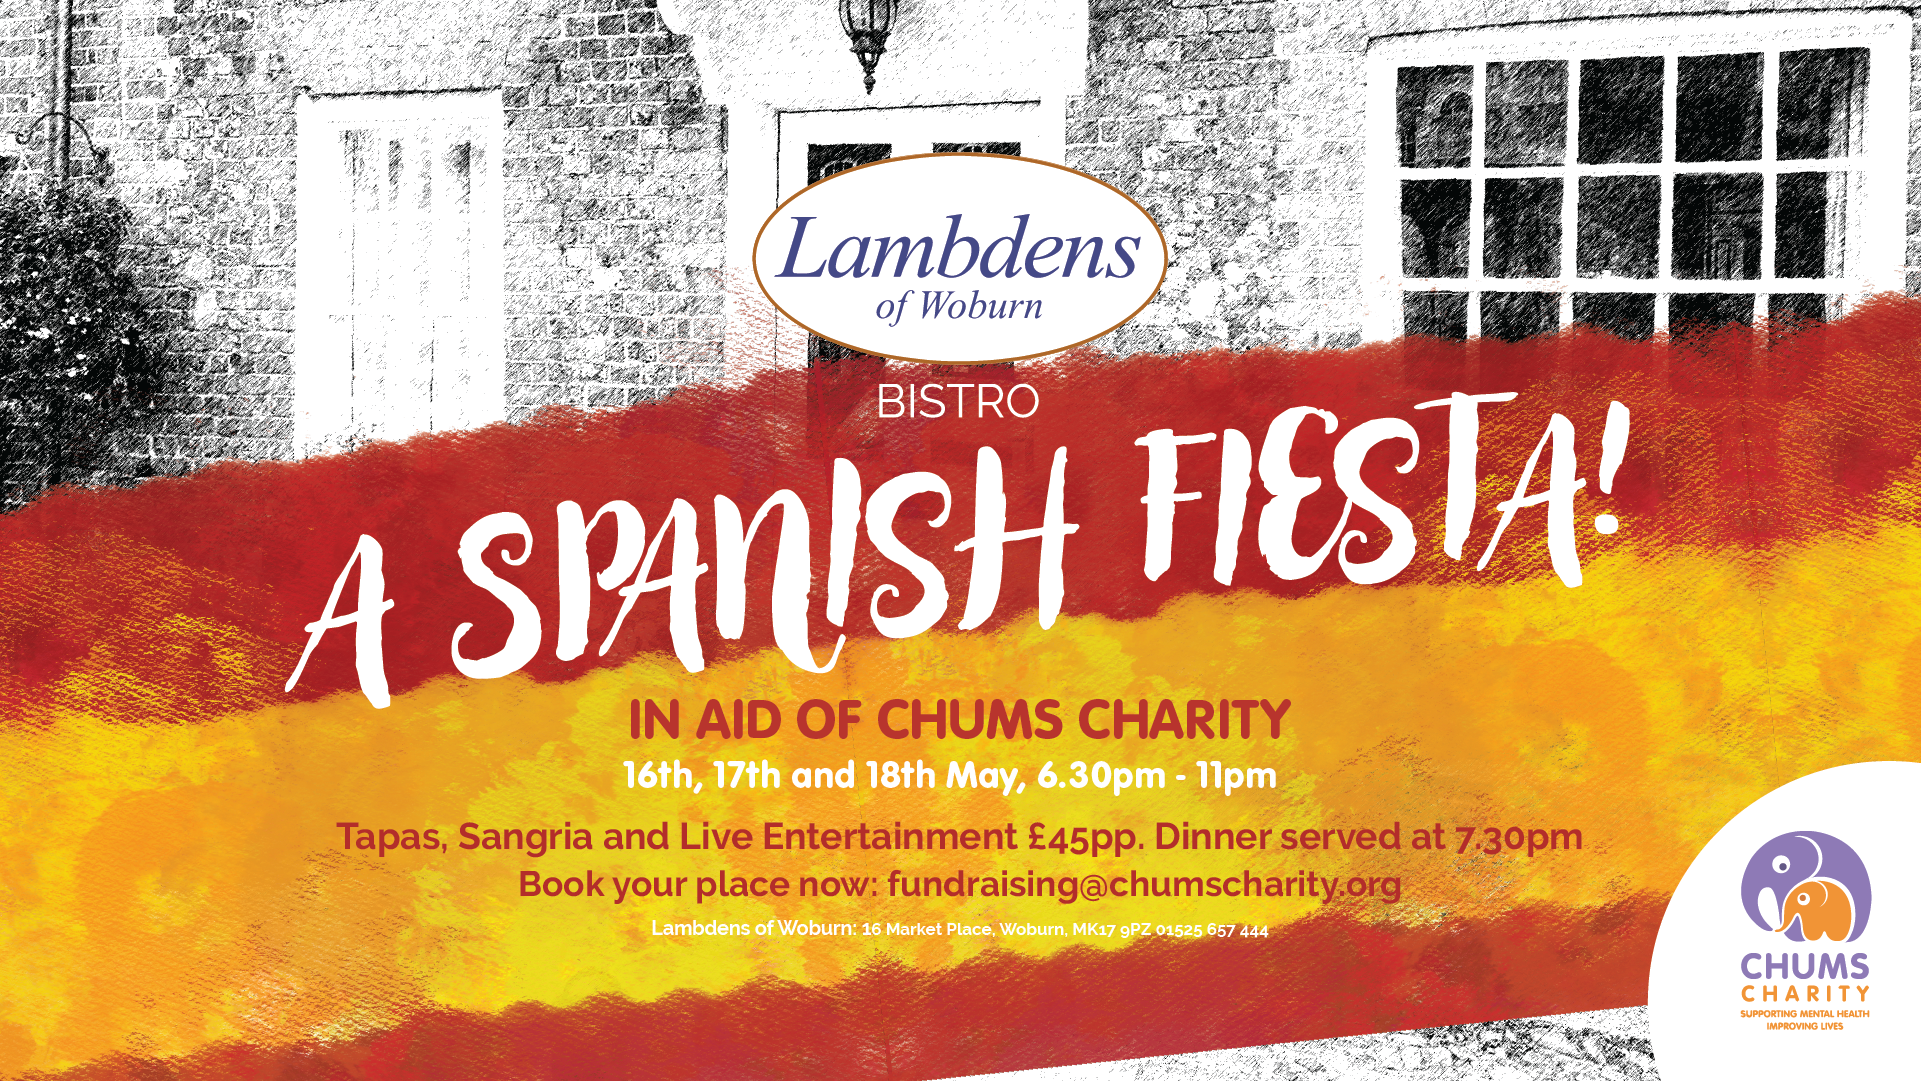 A Spanish Fiesta at Lambdens Bistro of Woburn